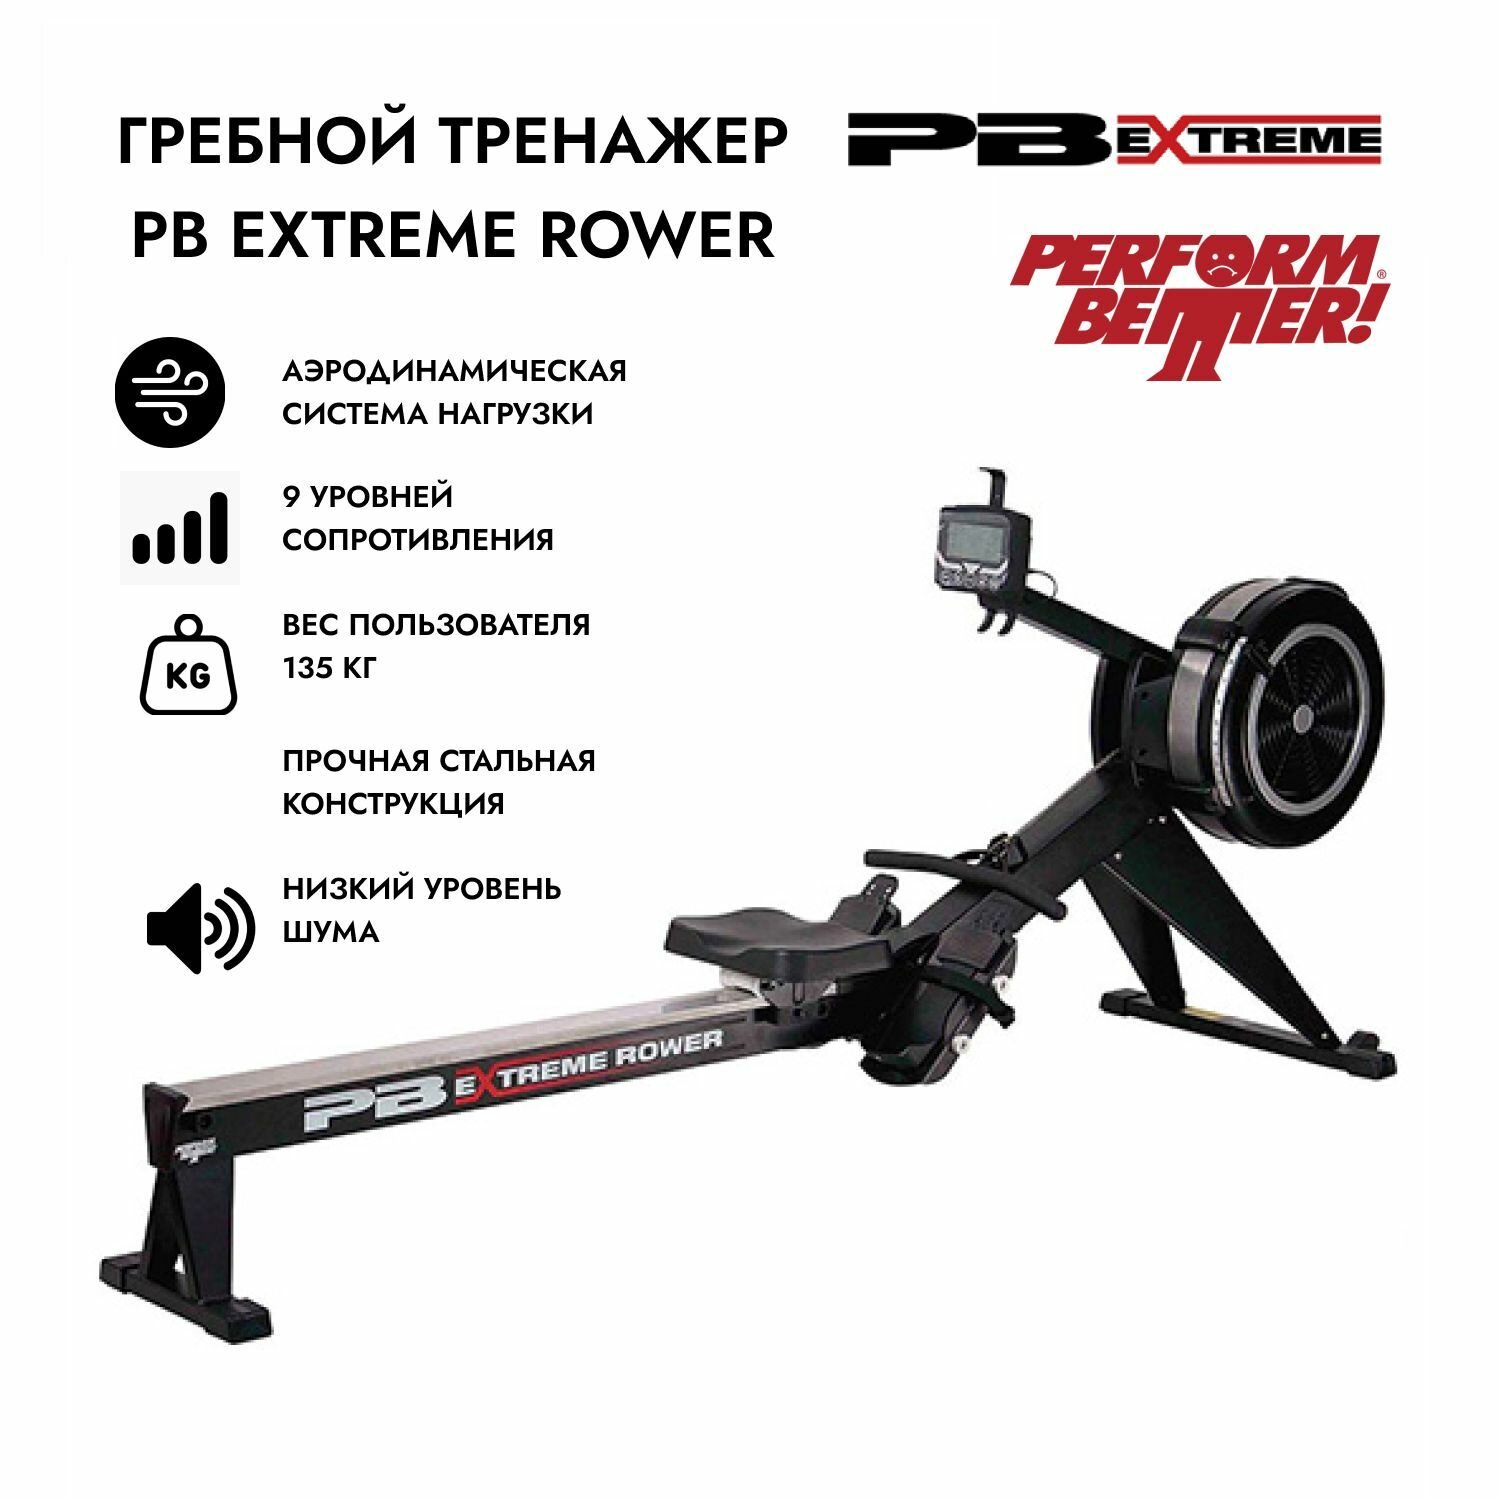 Тренажер гребной PERFORM BETTER Extreme Rower